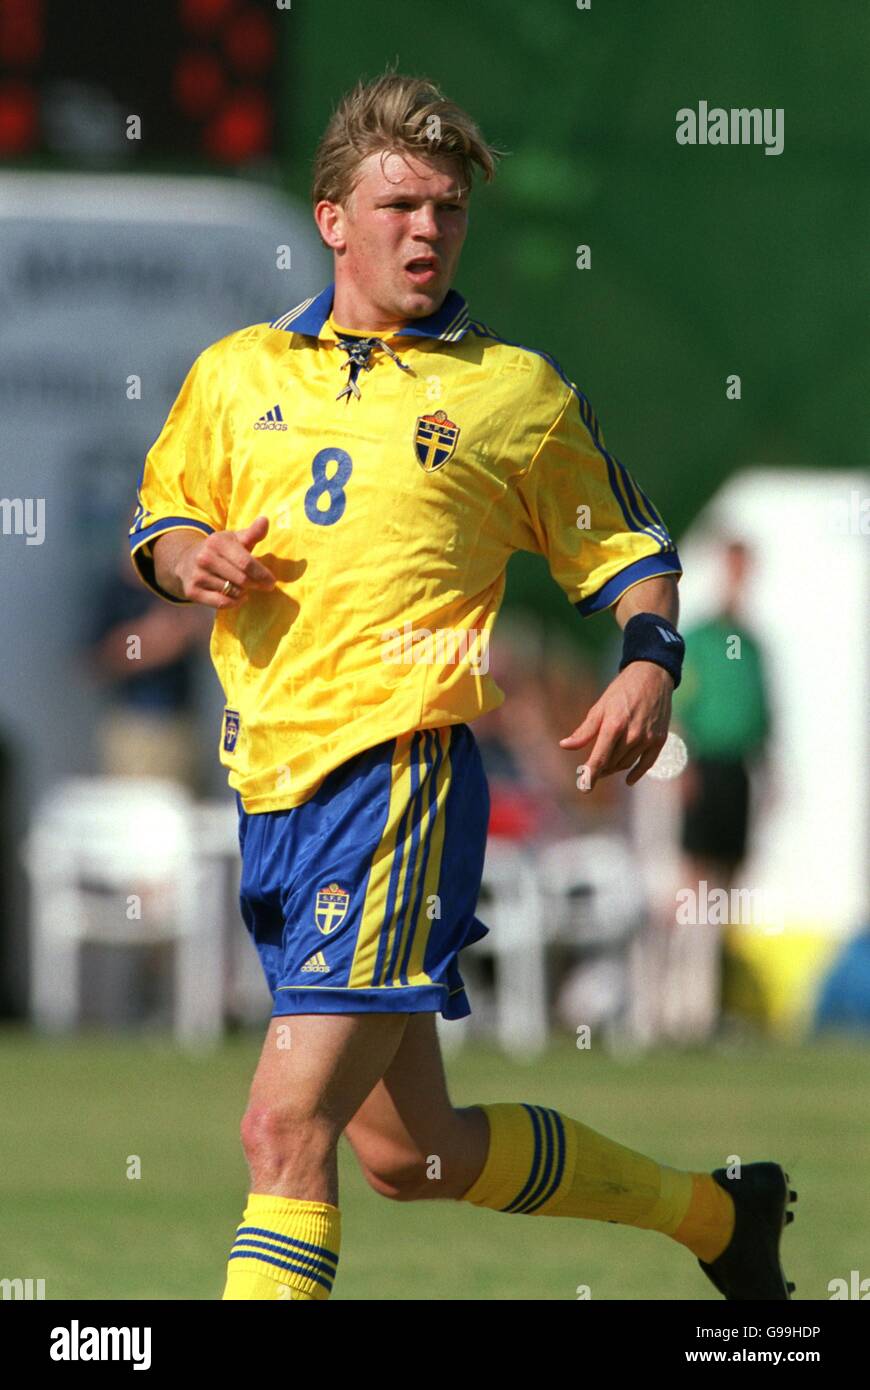 Calcio - Campionato nordico 2000-01 - Norvegia / Svezia - la Manga, Spagna.  Marcus Allback svedese Foto stock - Alamy